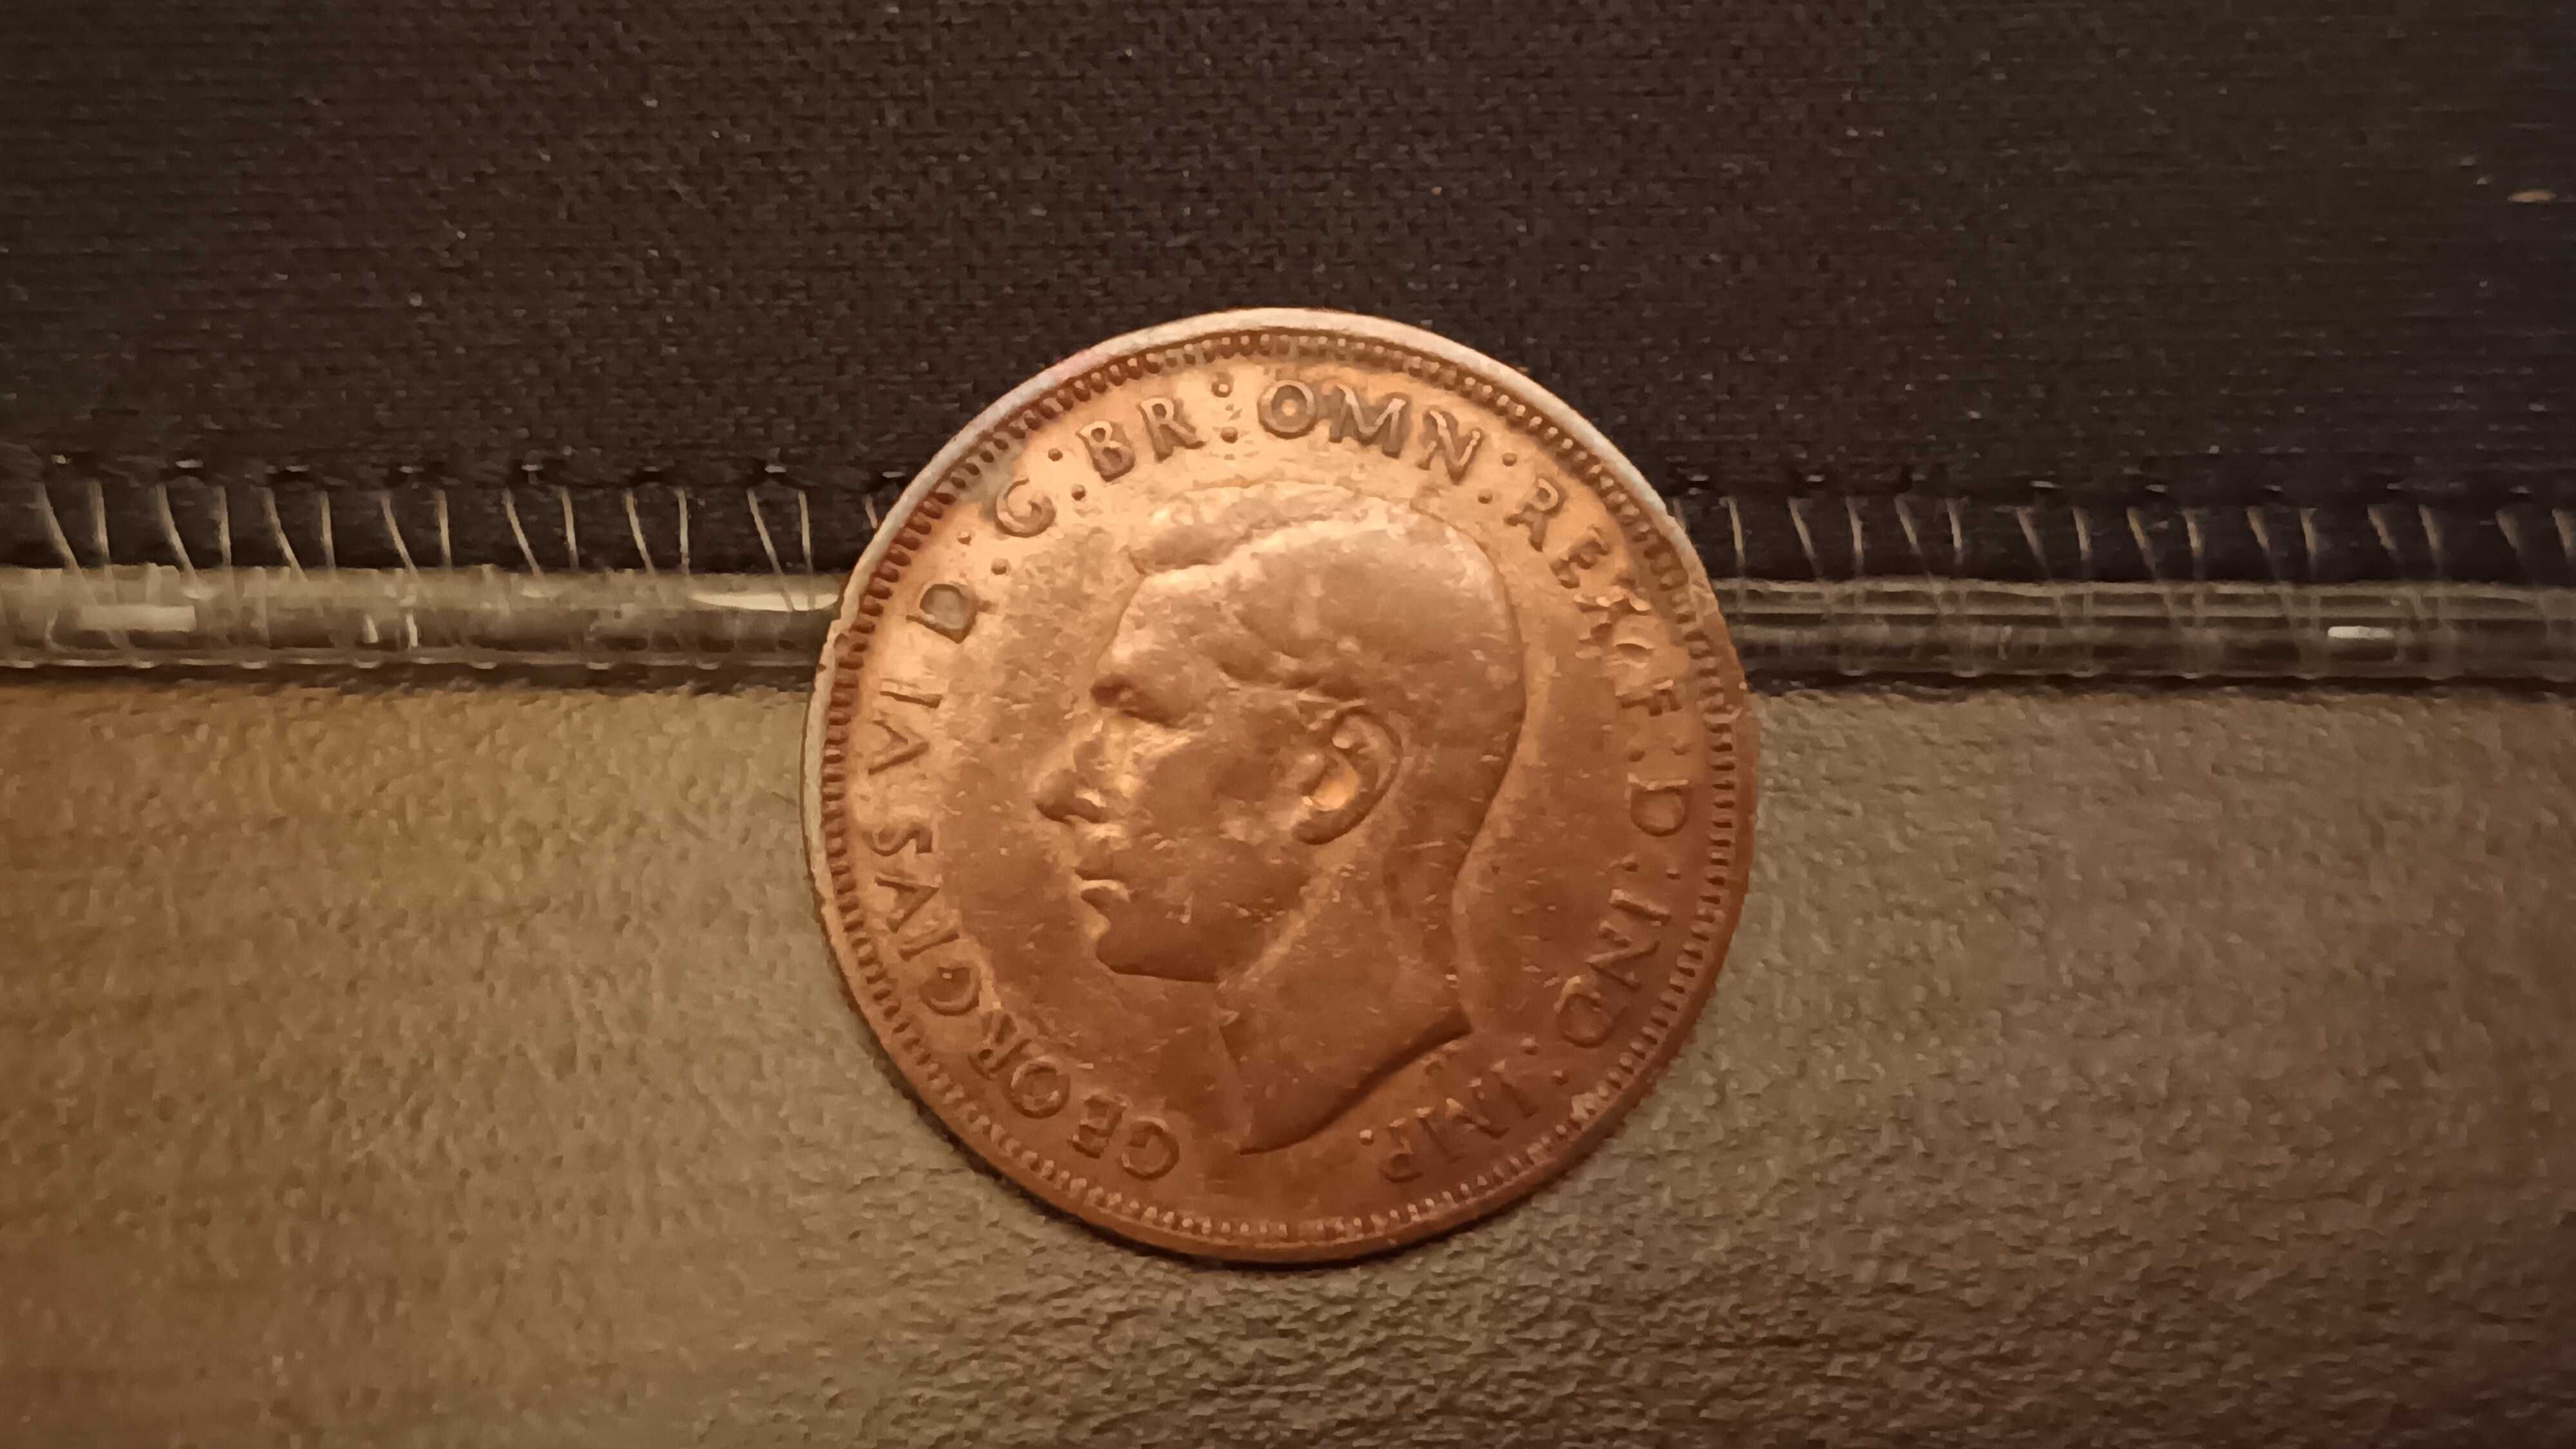 Moneta Wielka Brytania Half Penny, 1942